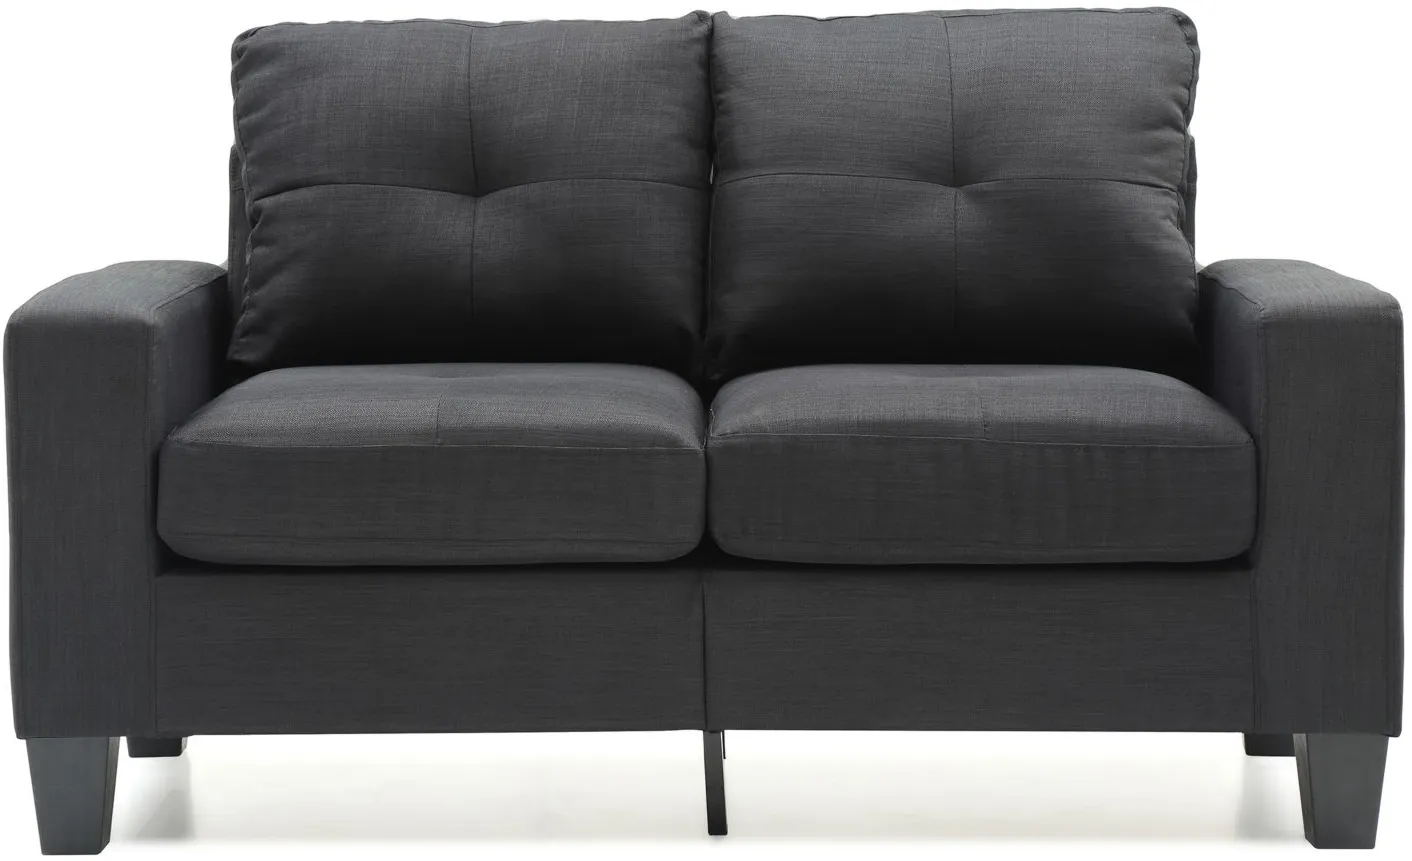 Newbury Modular Loveseat by Glory Furniture in Black by Glory Furniture